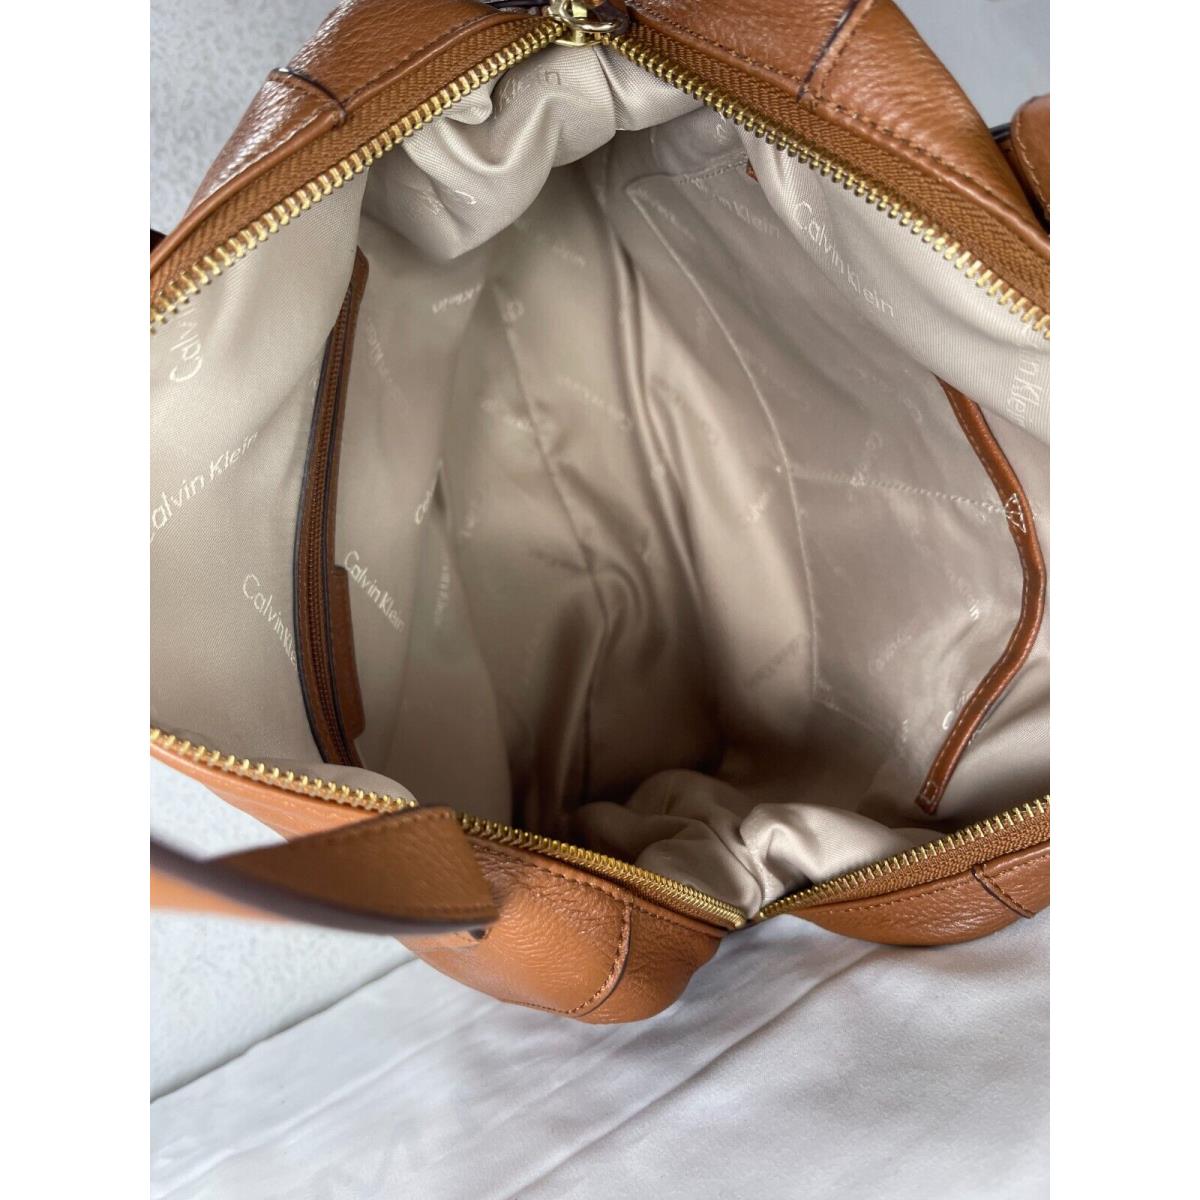 Politiek wenselijk Vervorming Women`s Bag - Calvin Klein - Tan Leather Dome Satchel- Sooft Garment Leather  - Calvin Klein bag - | Fash Brands